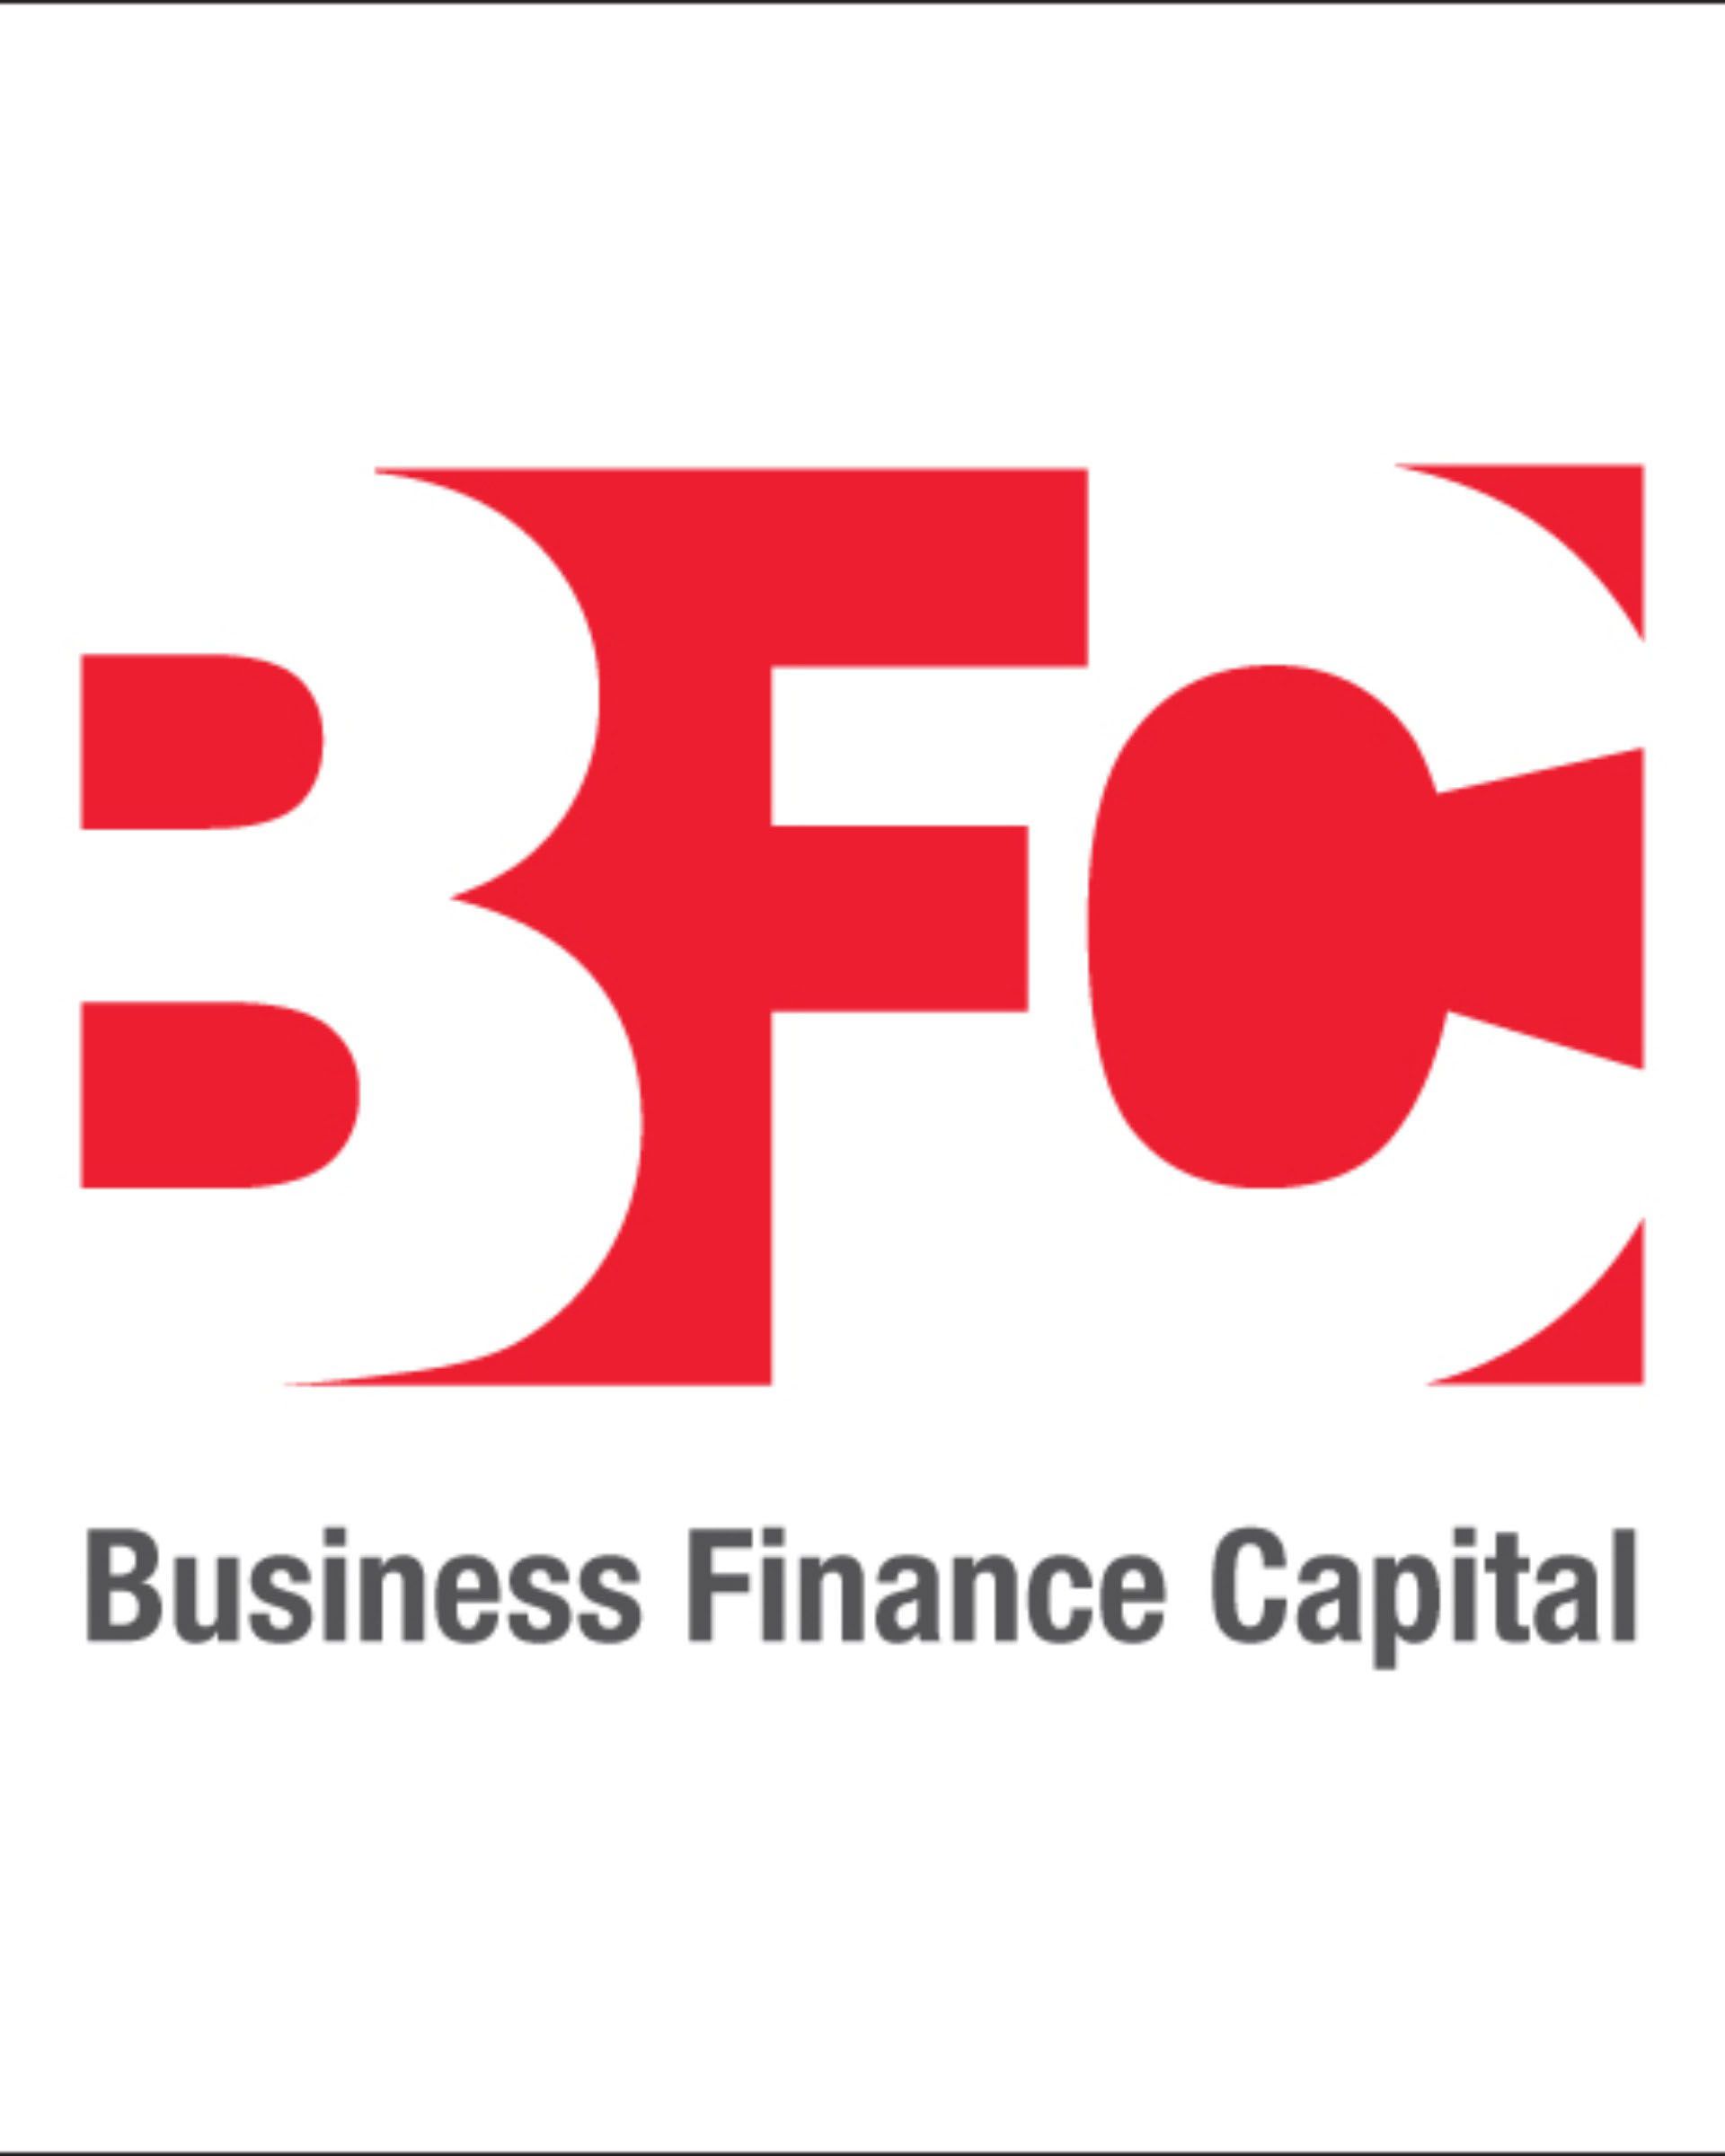 Business Finance Capital